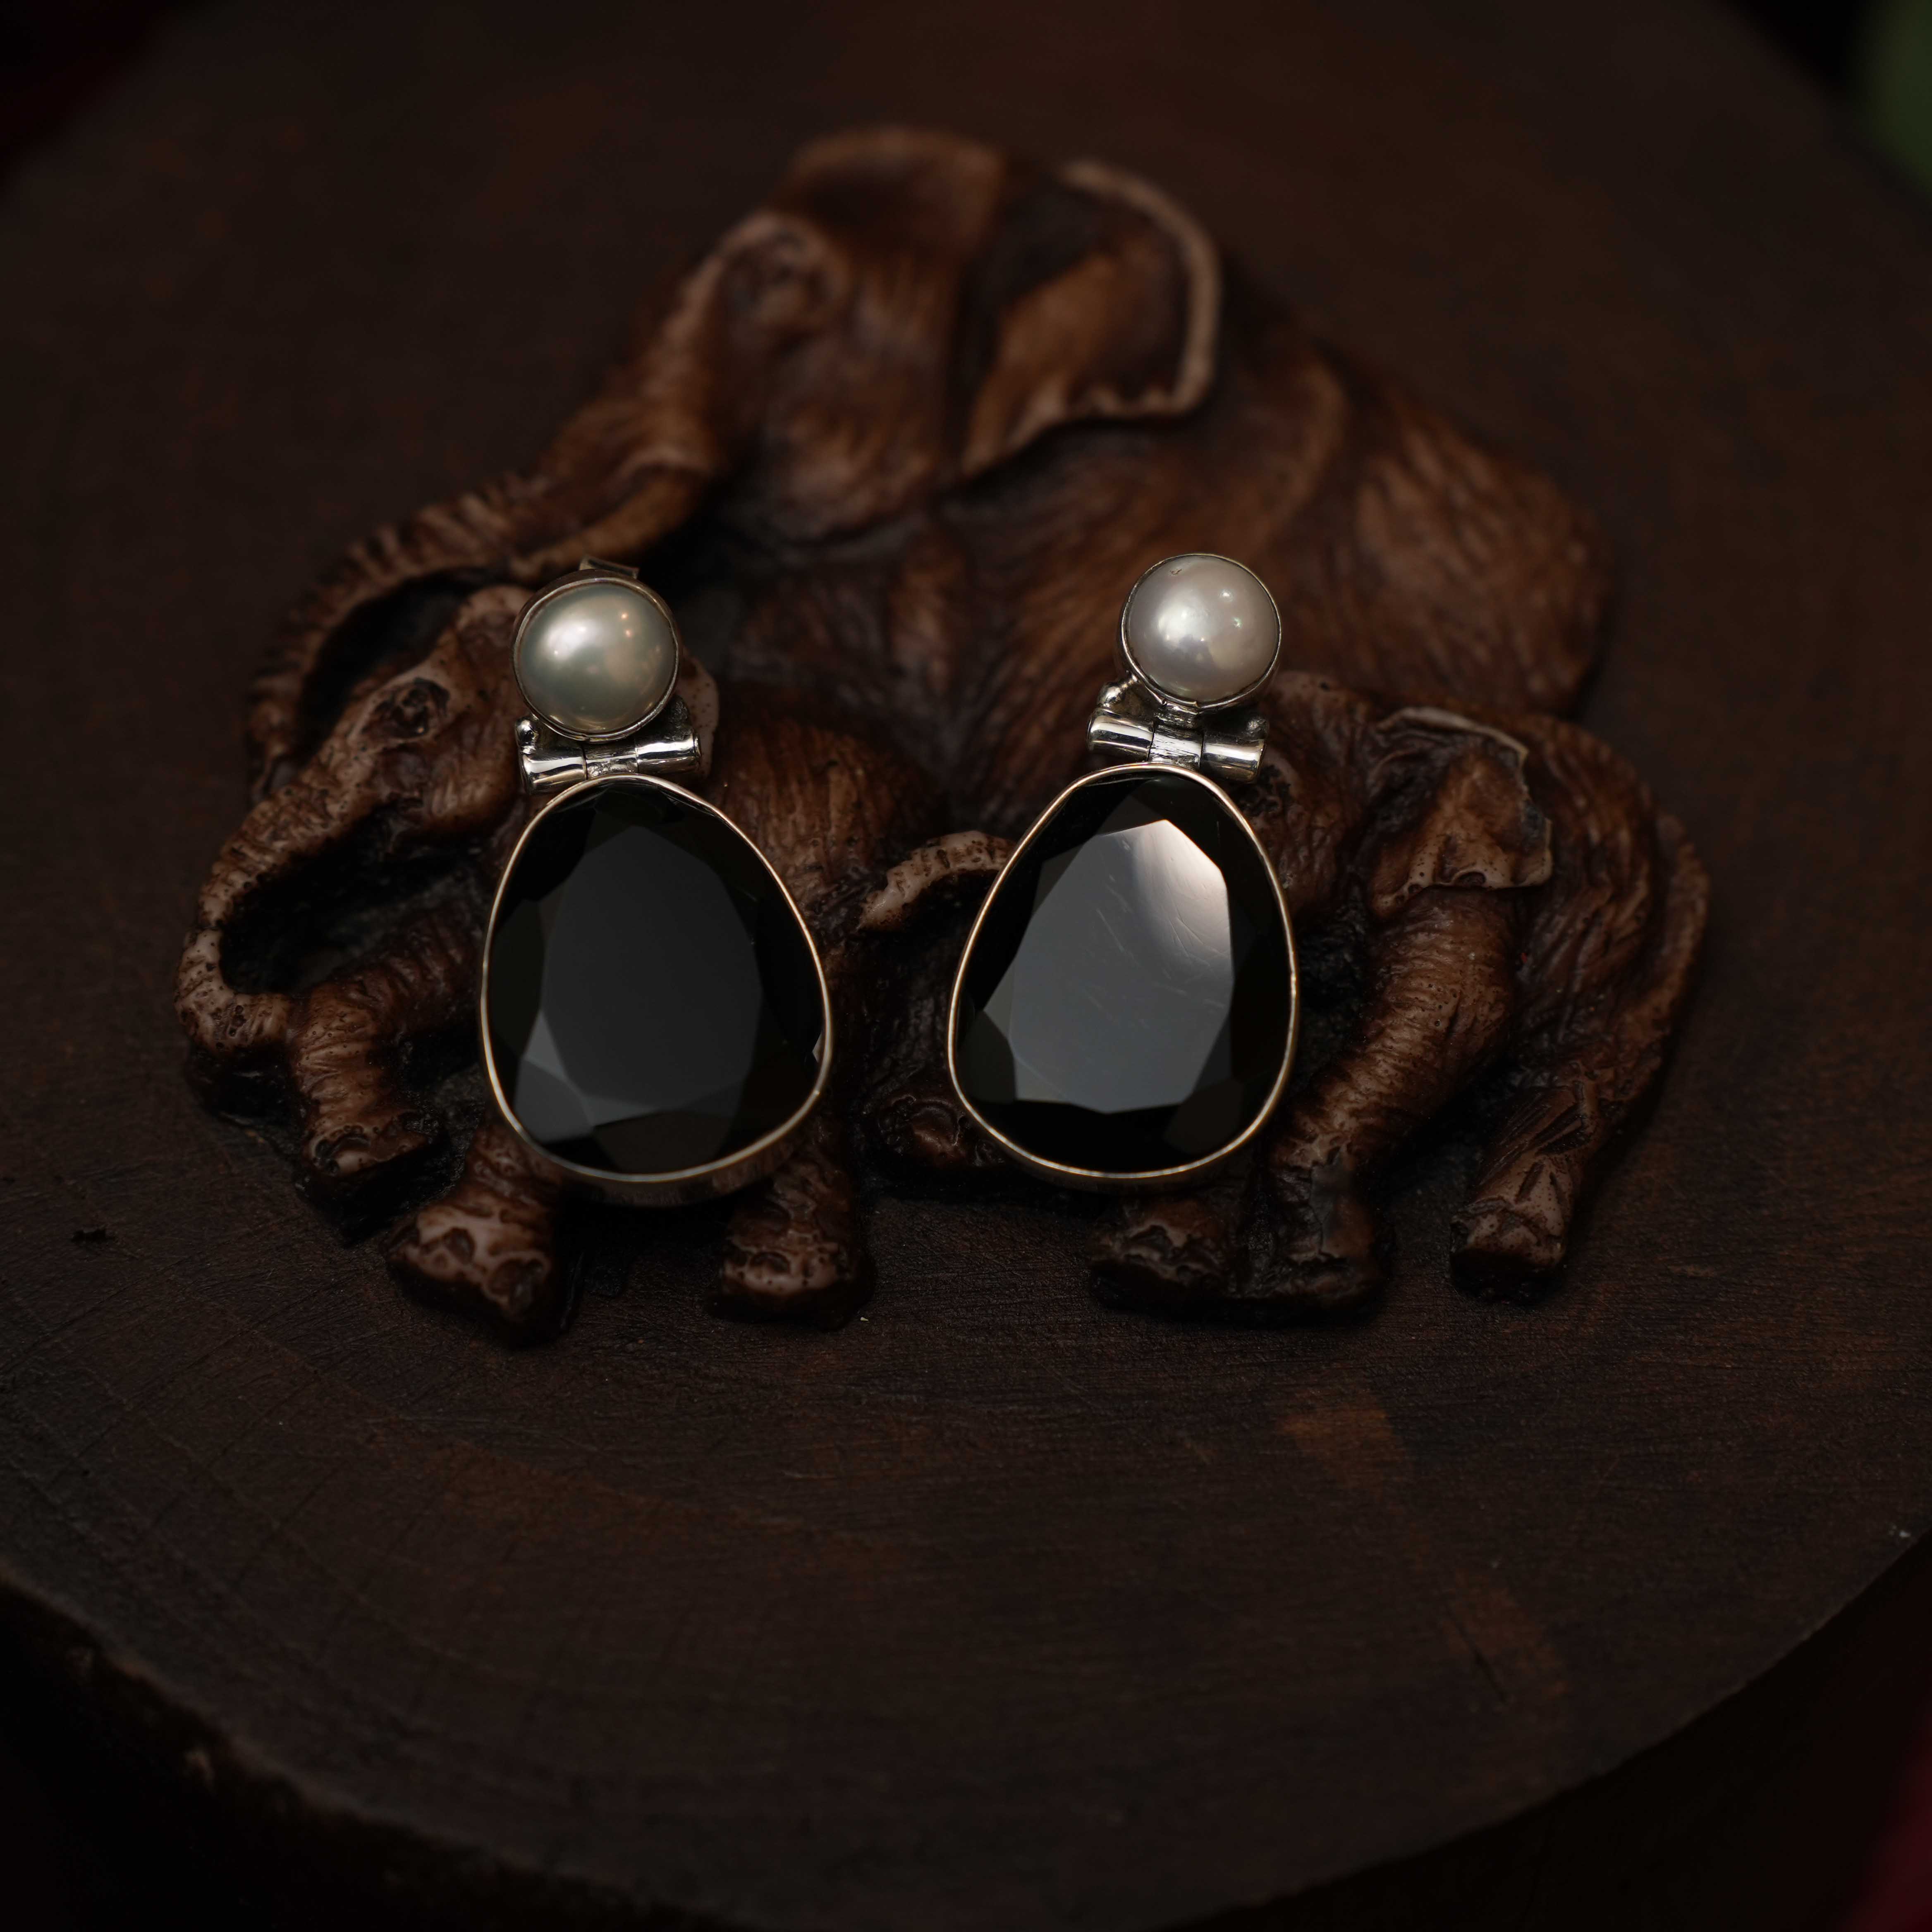 Rushmitha 925 Oxidized Silver Earrings - Black